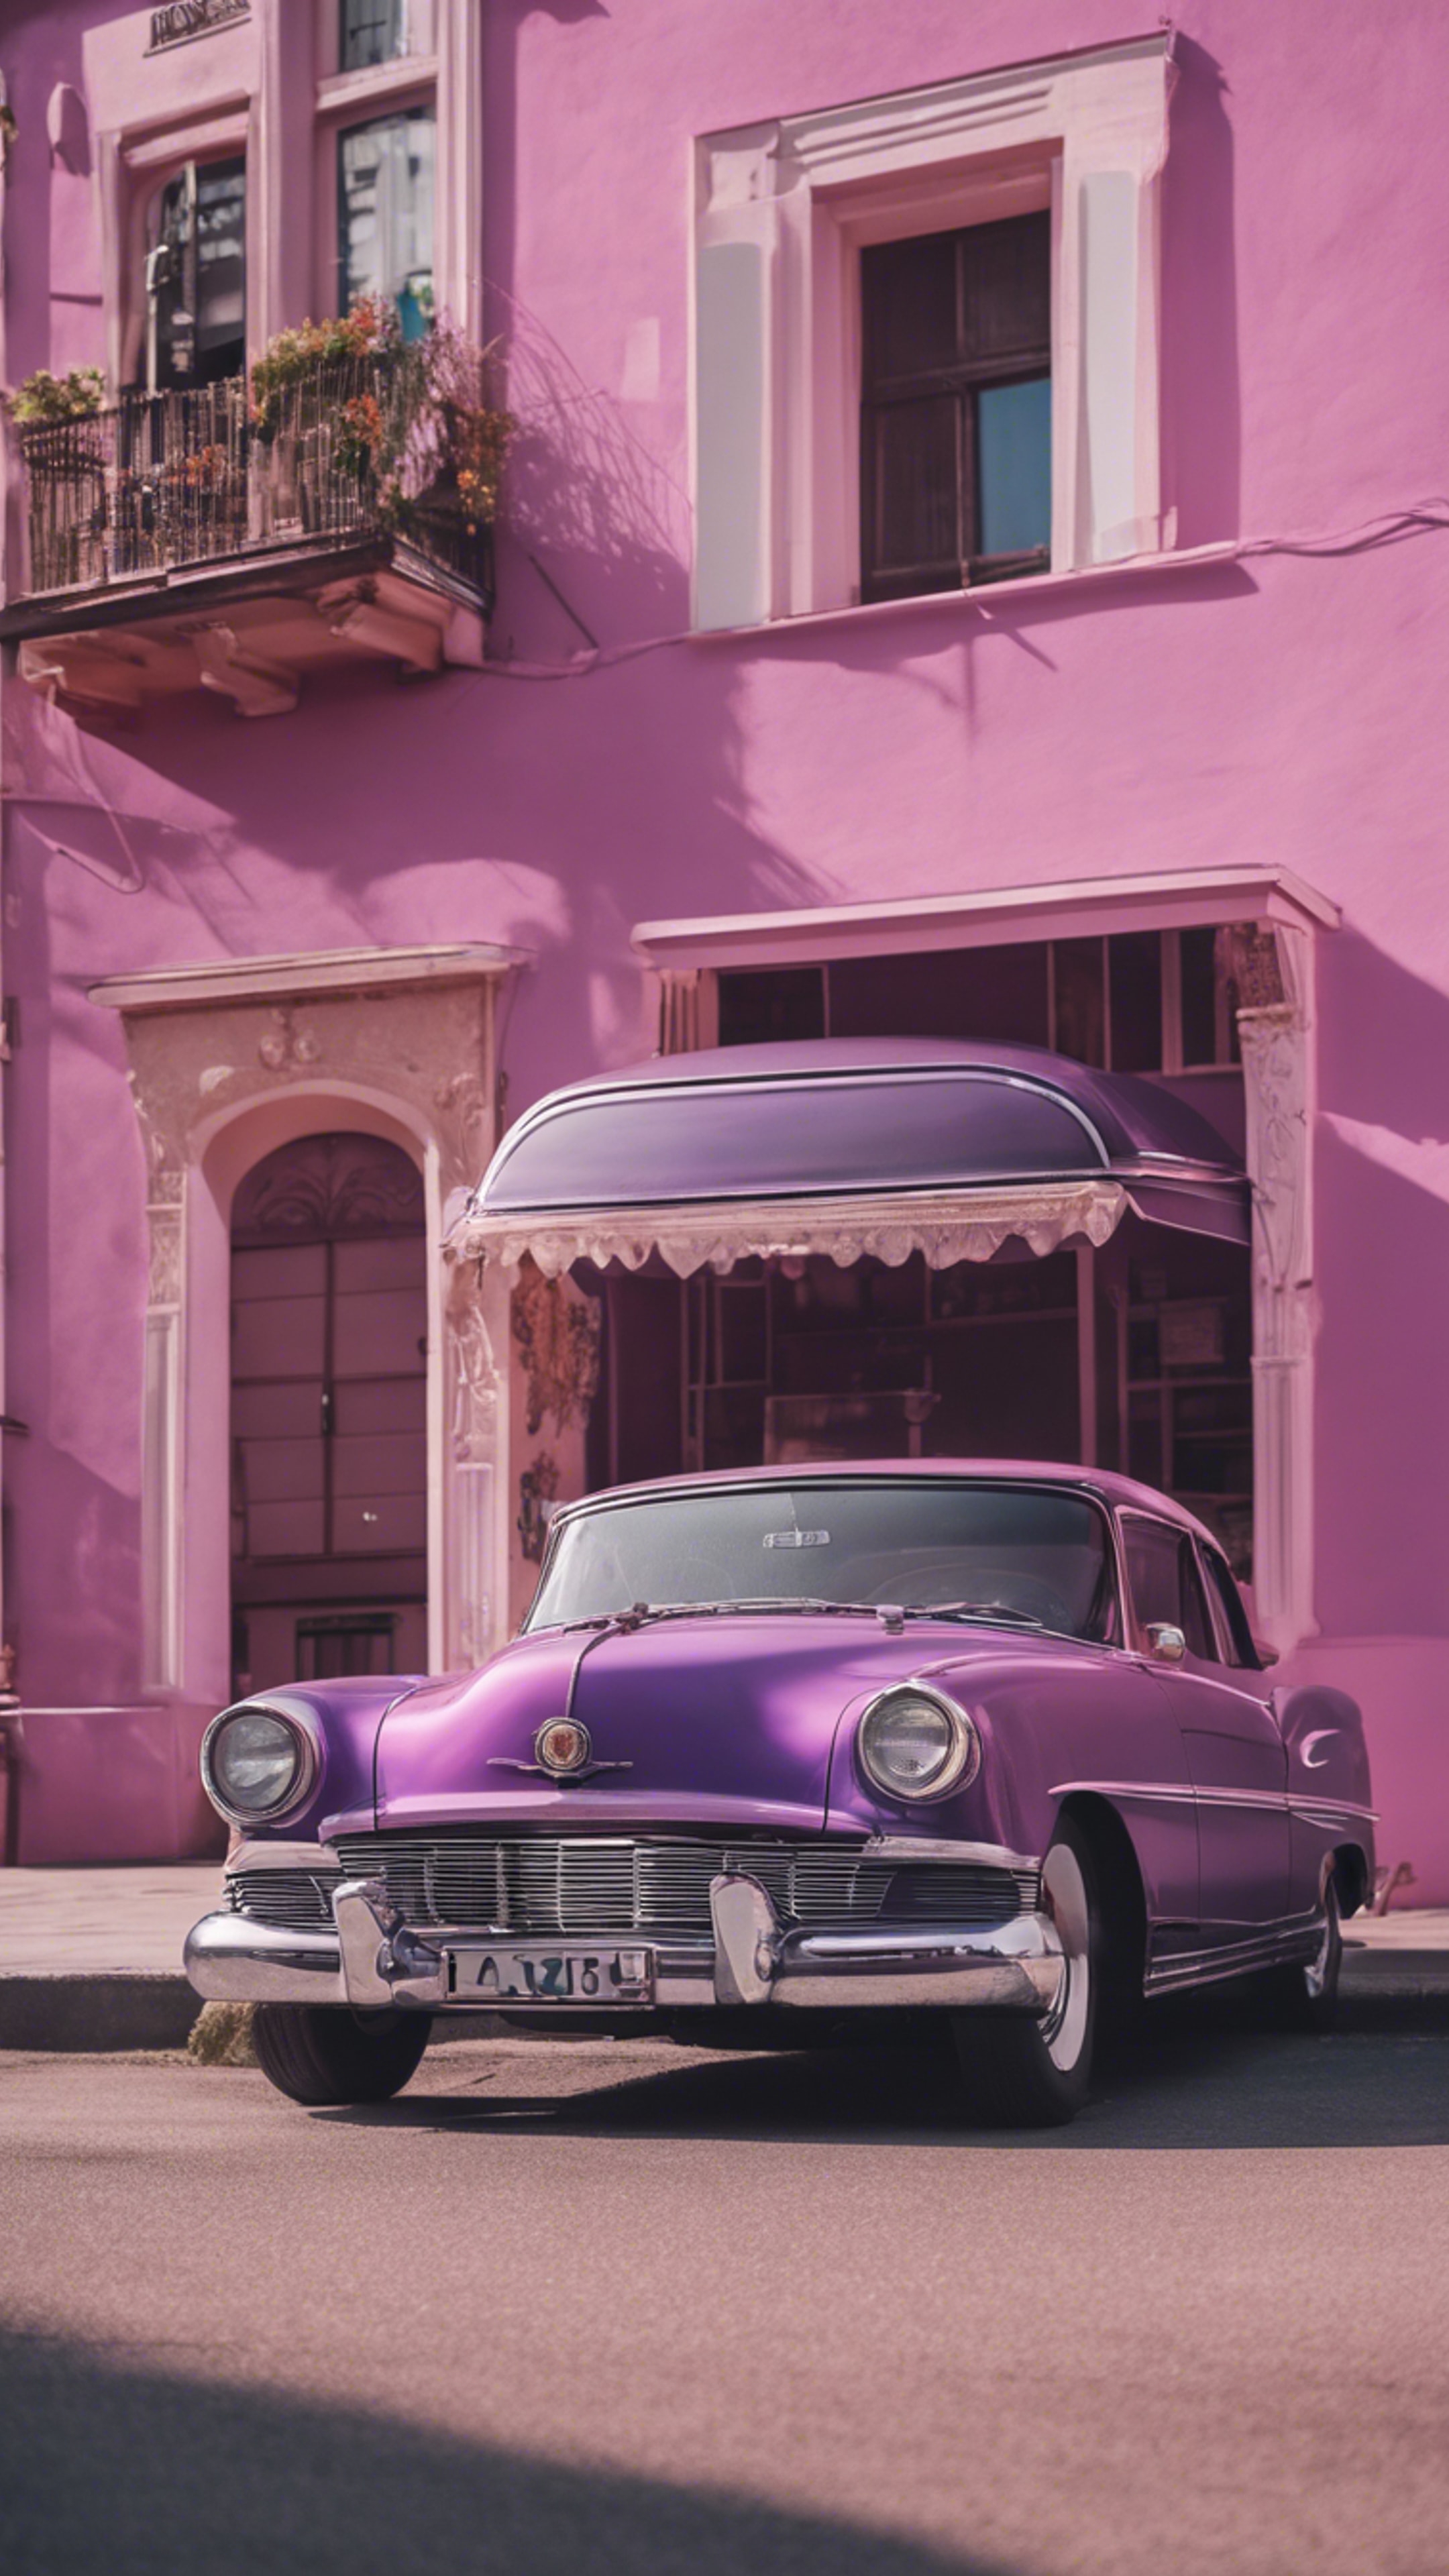 A purple vintage car parked by a pink pastel building. Tapeta[f1101ed4526e489a8b1f]